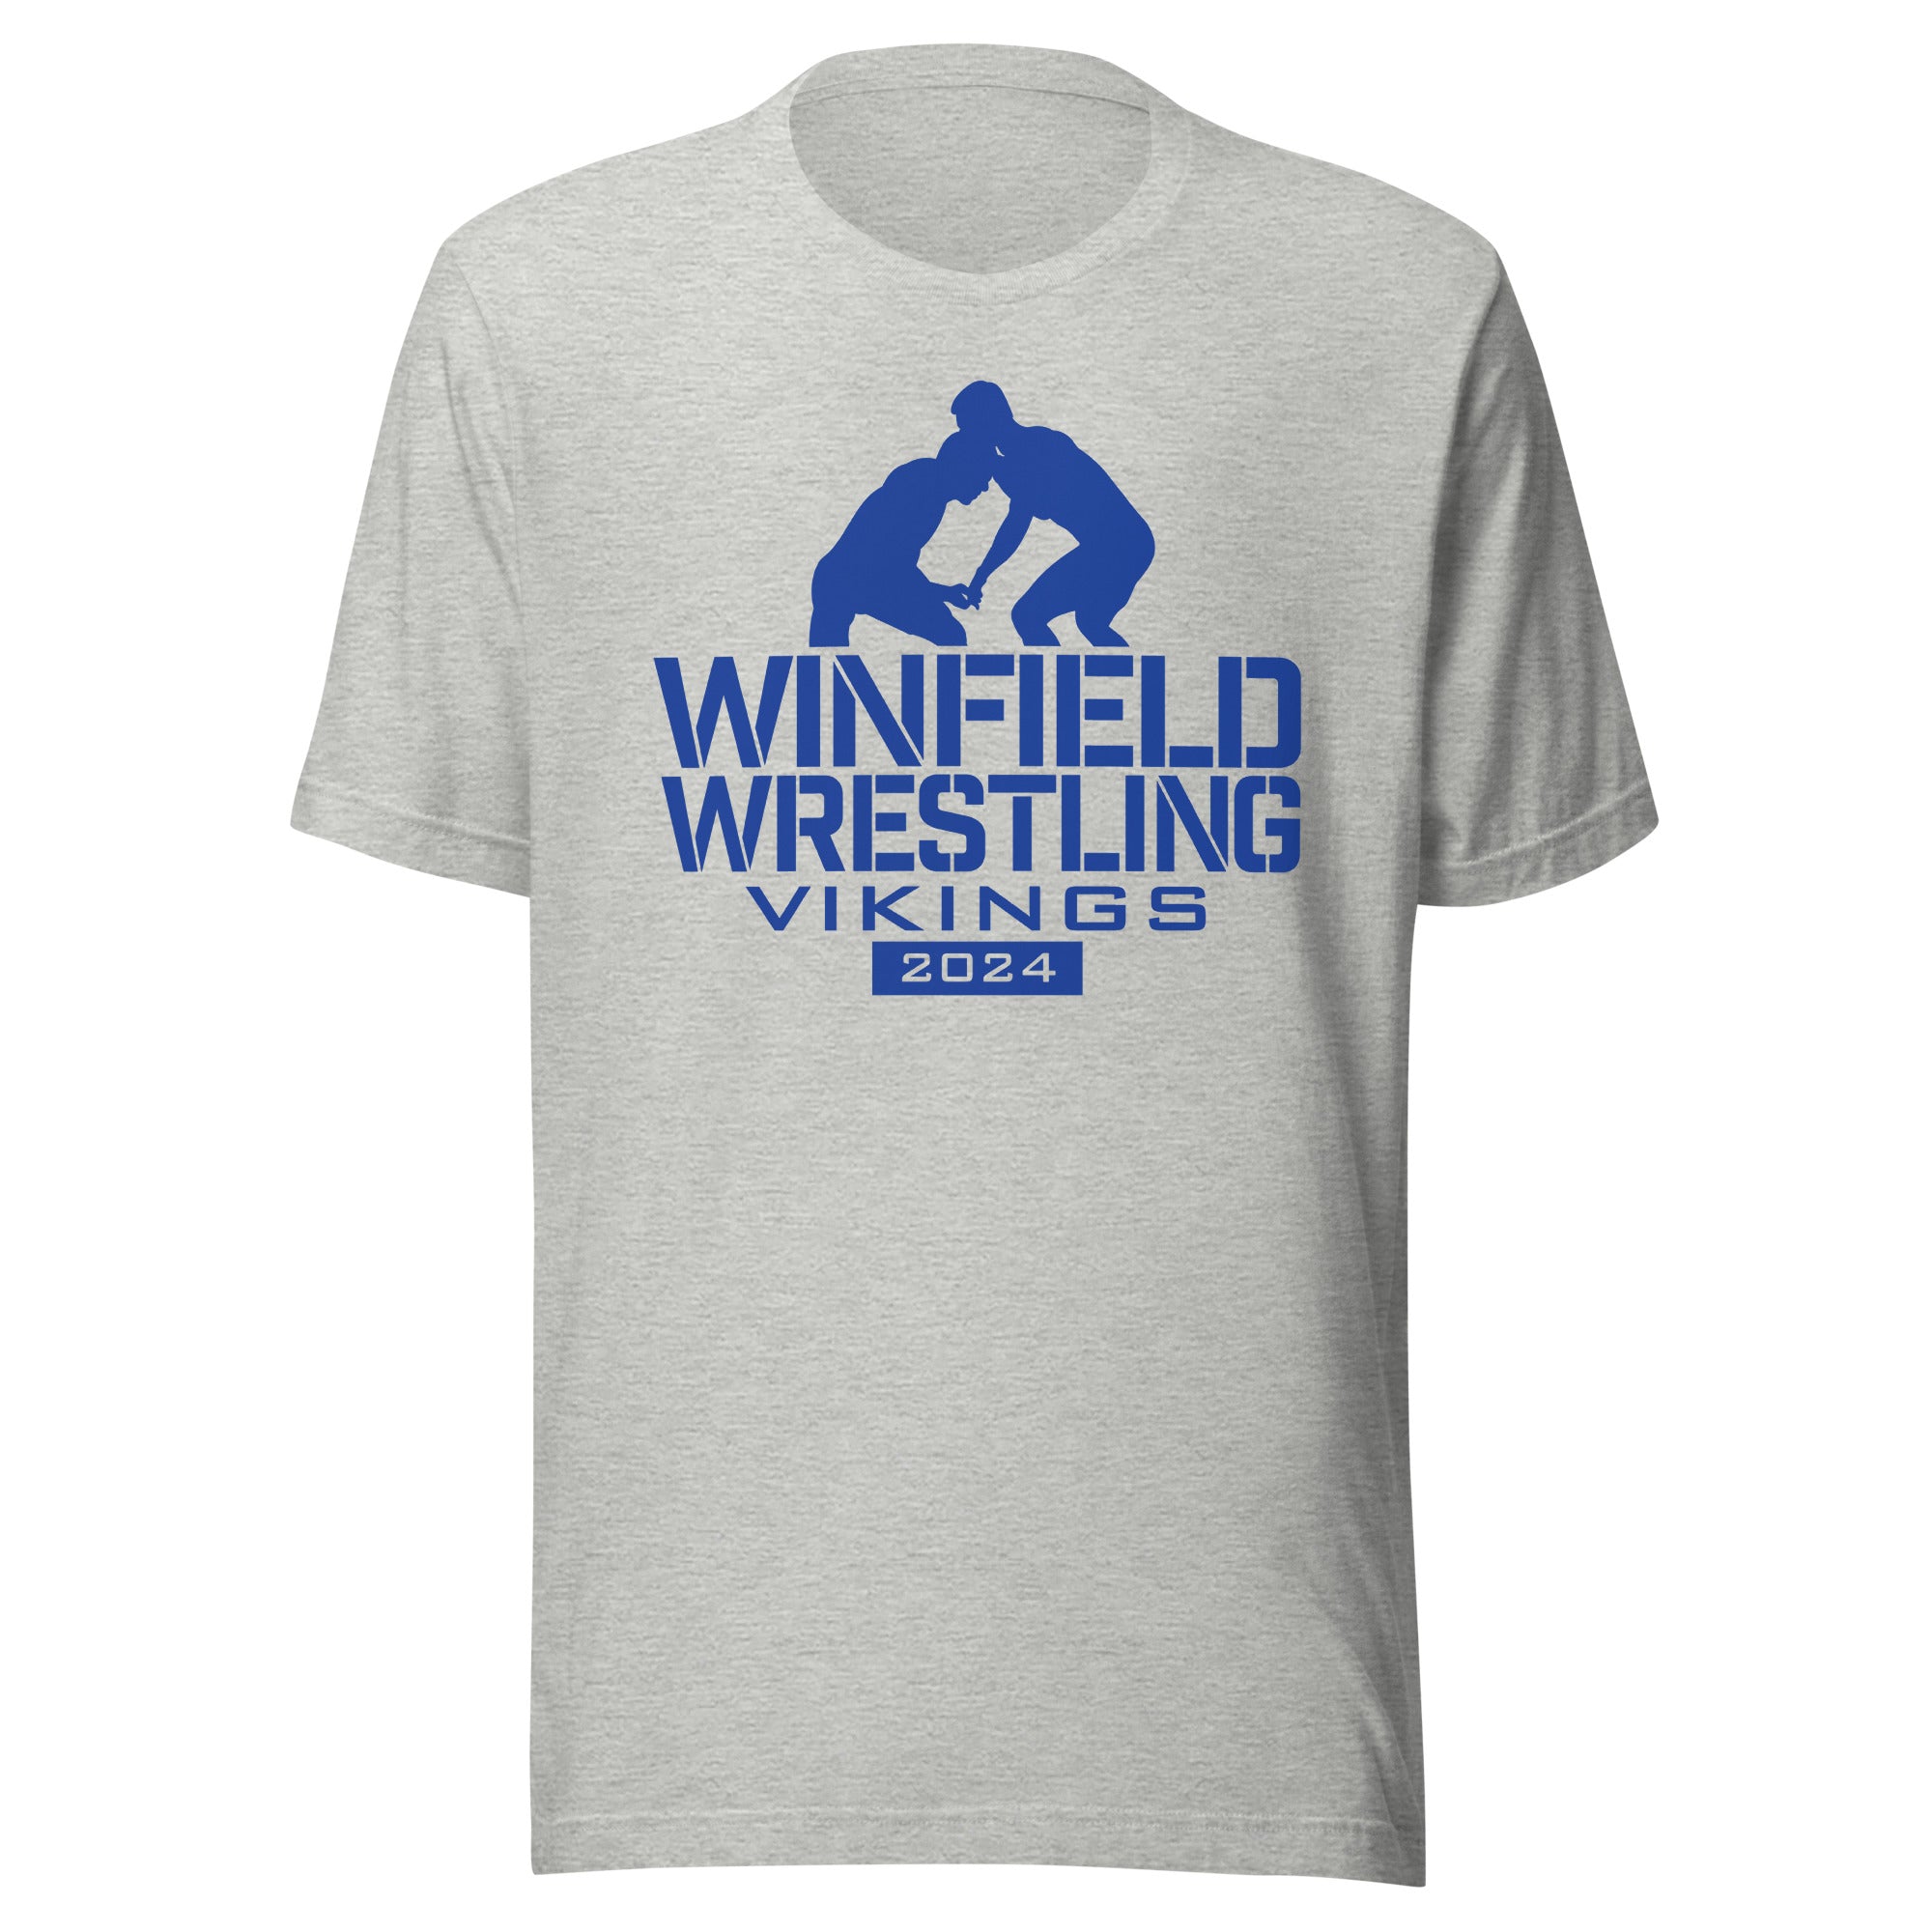 Winfield Wrestling Vikings 2024 Unisex t-shirt